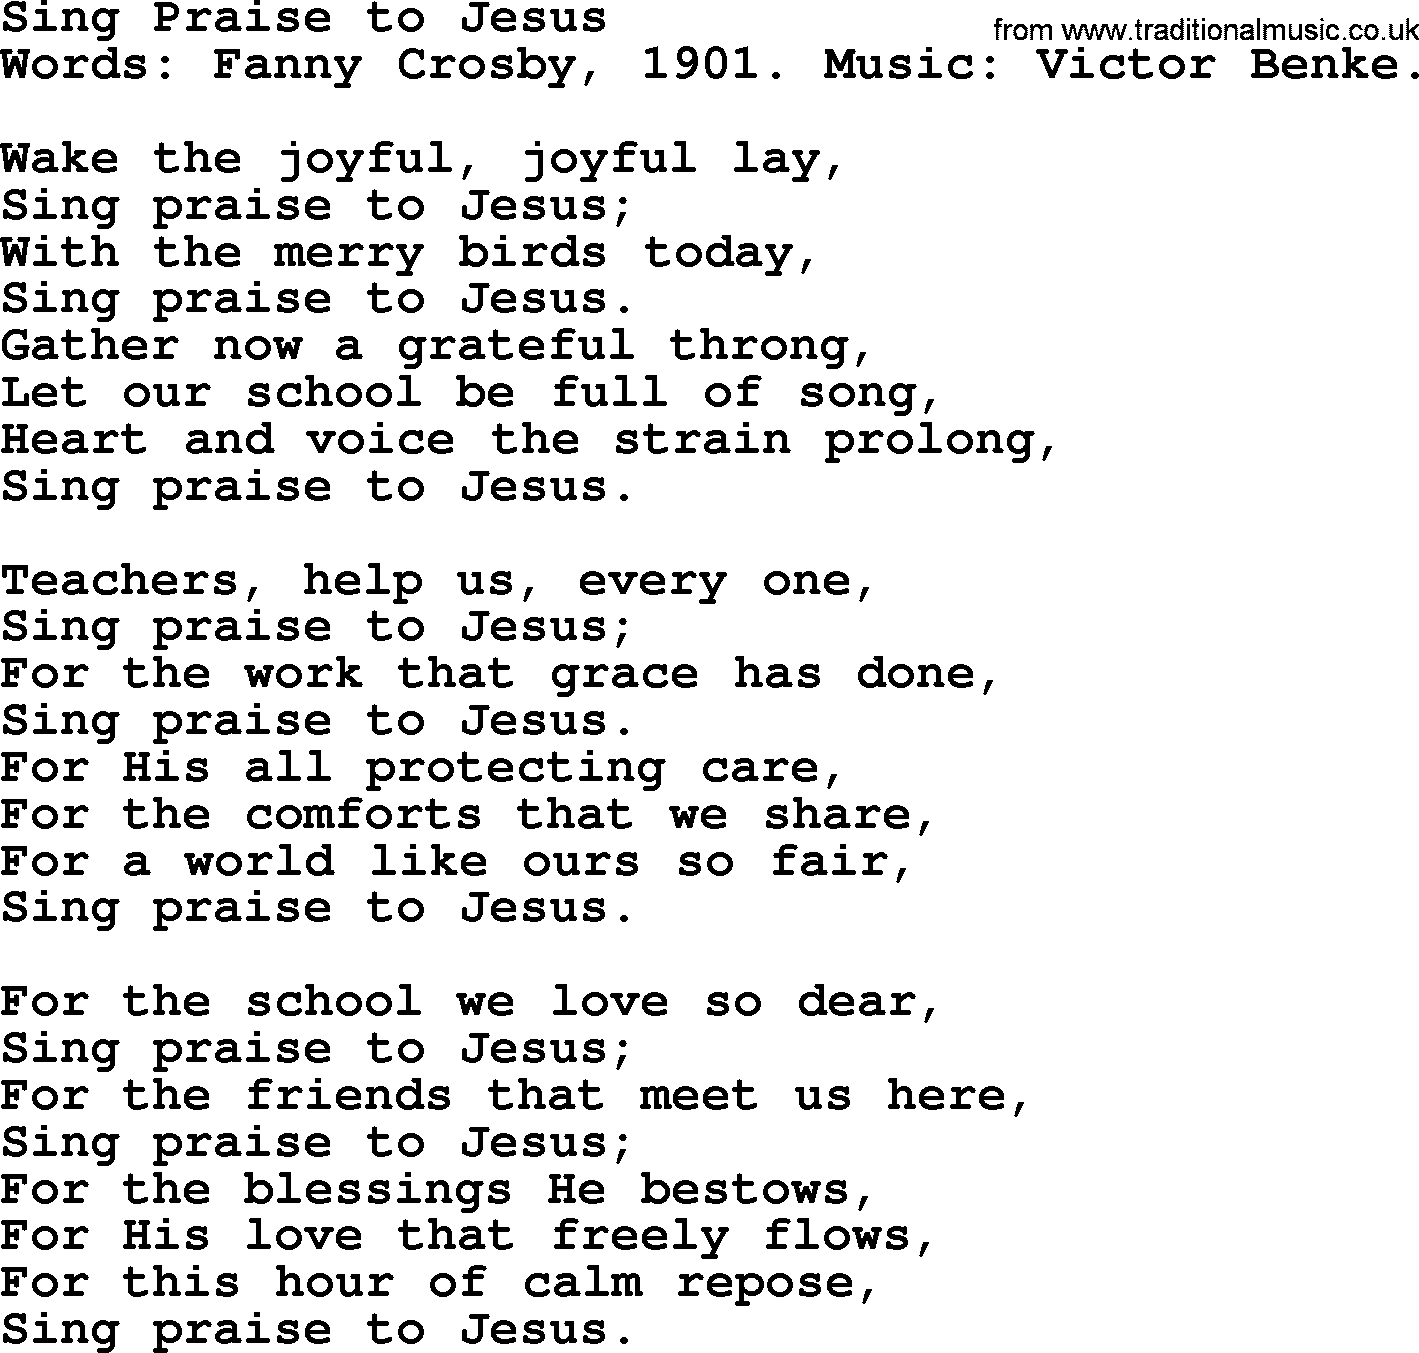 Fanny Crosby song: Sing Praise To Jesus, lyrics